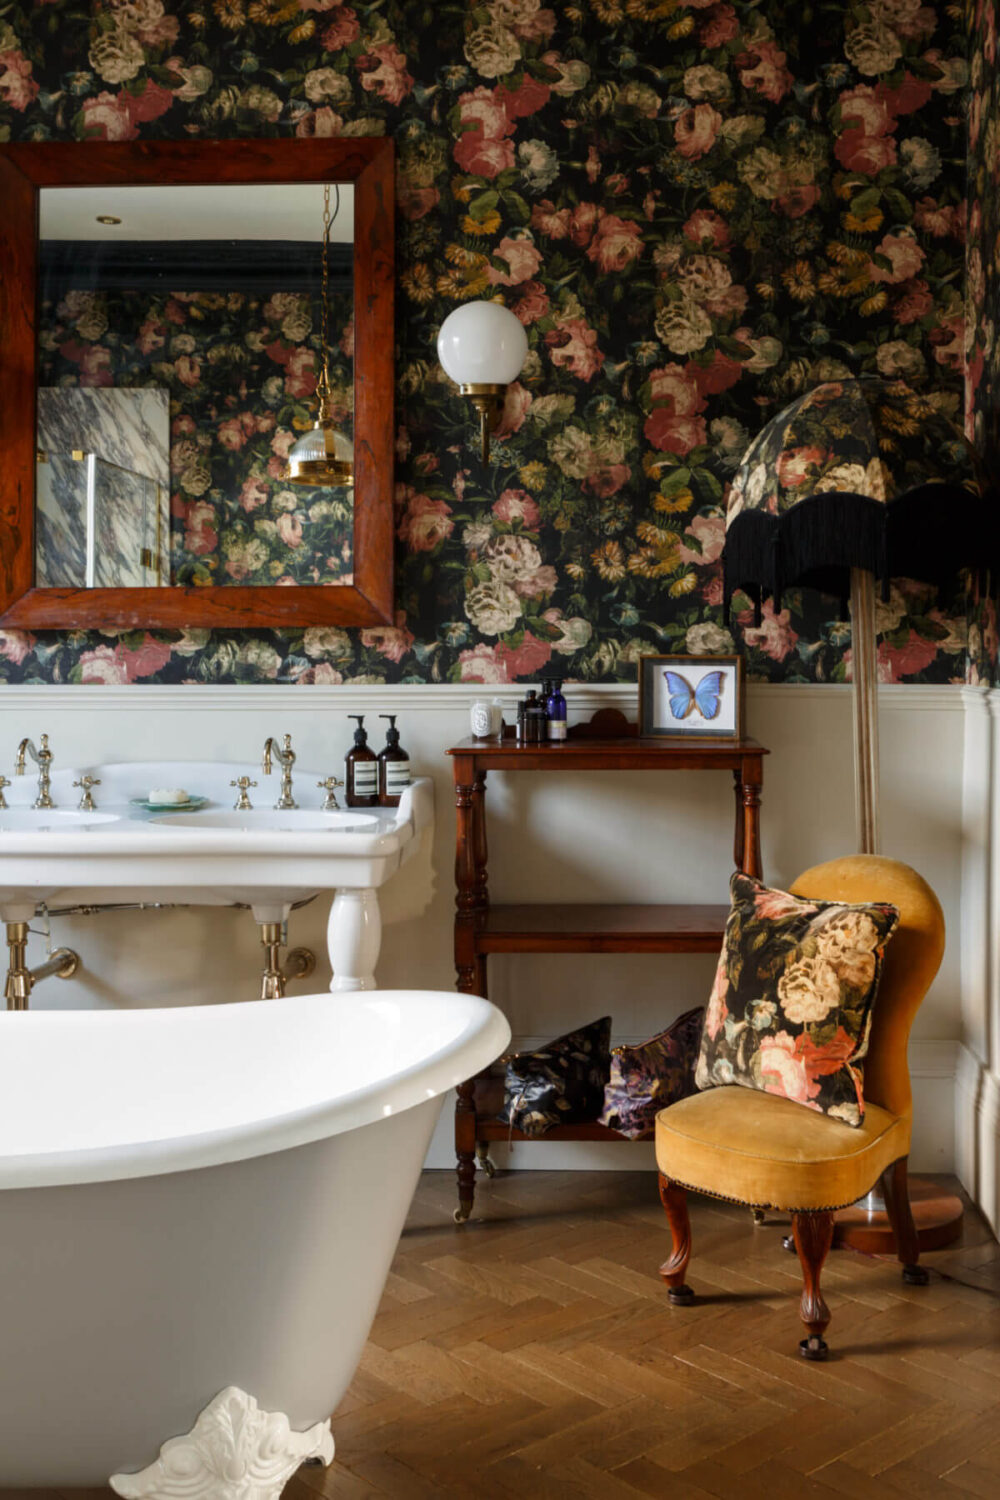 floral-wallpaper-vintage-style-bathroom-freestanding-bath-nordroom